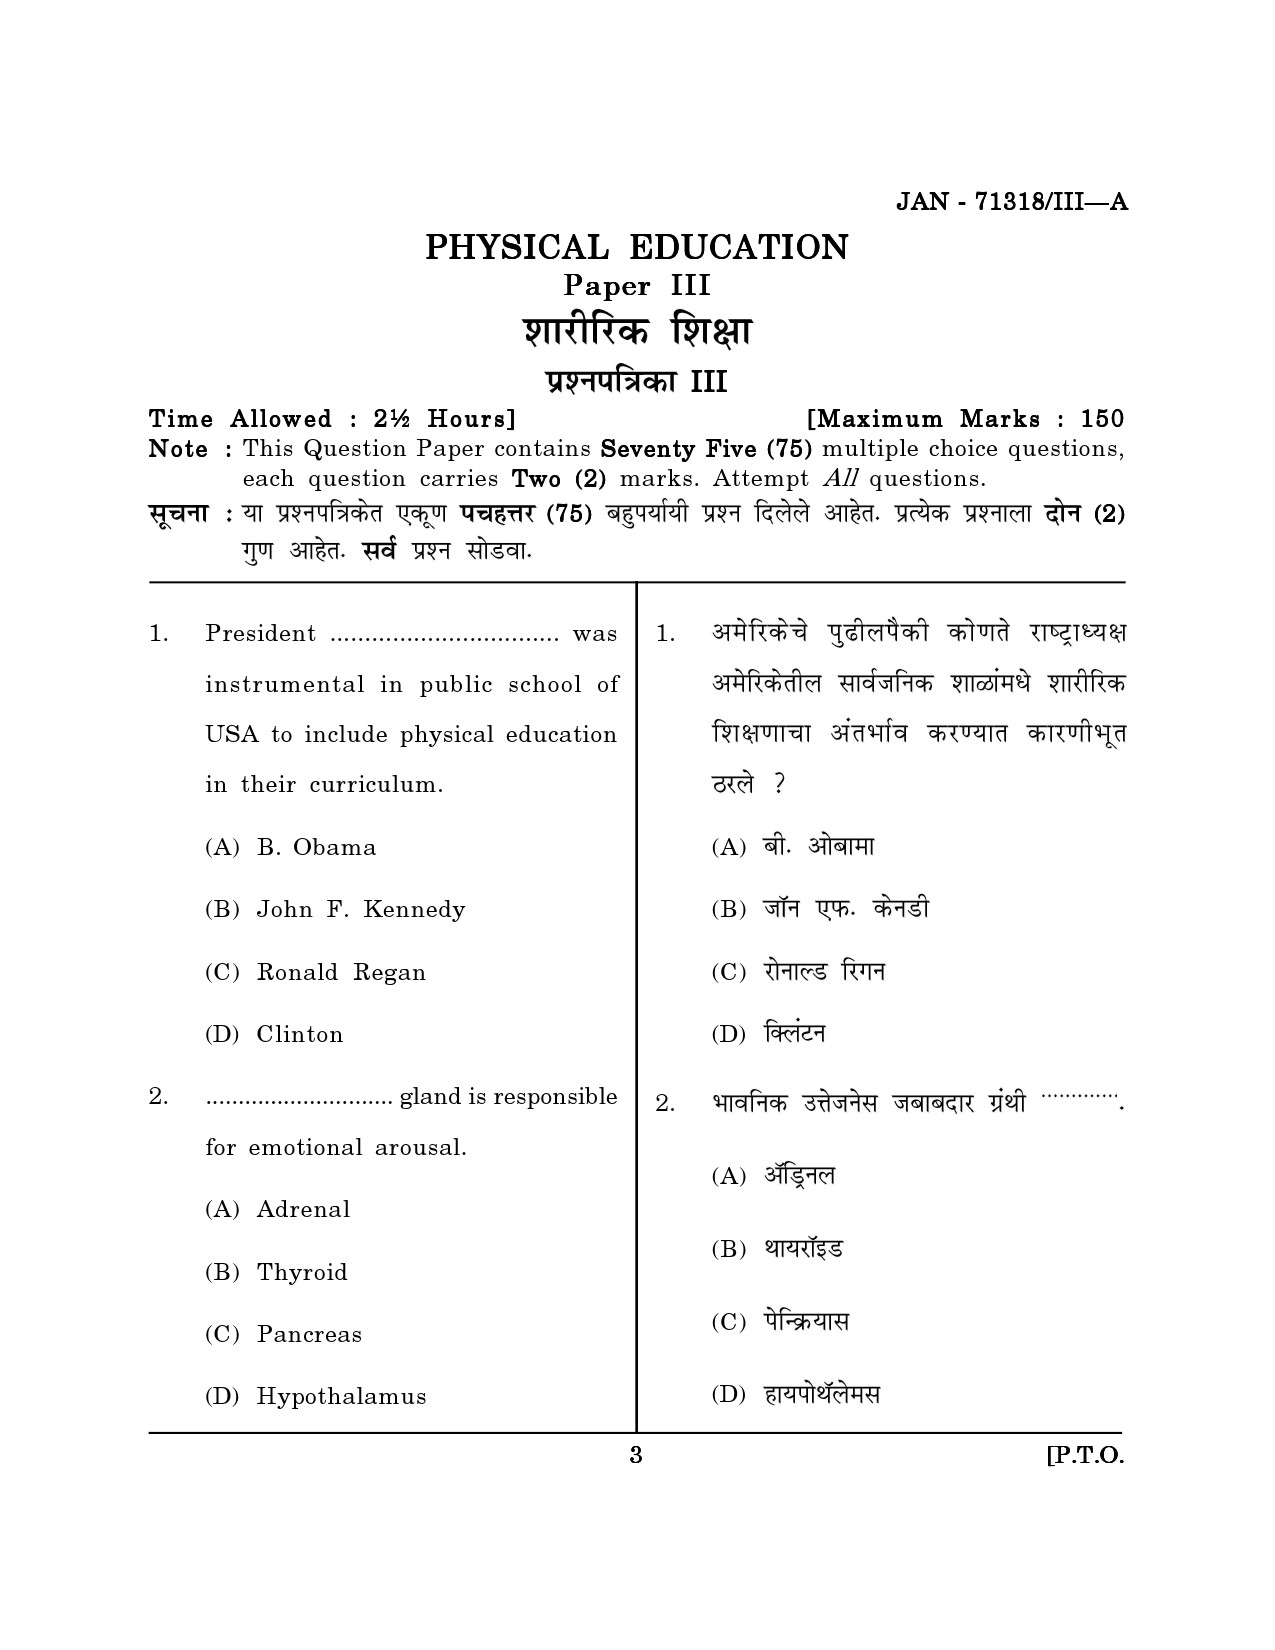 Maharashtra SET Physical Education Question Paper III January 2018 2